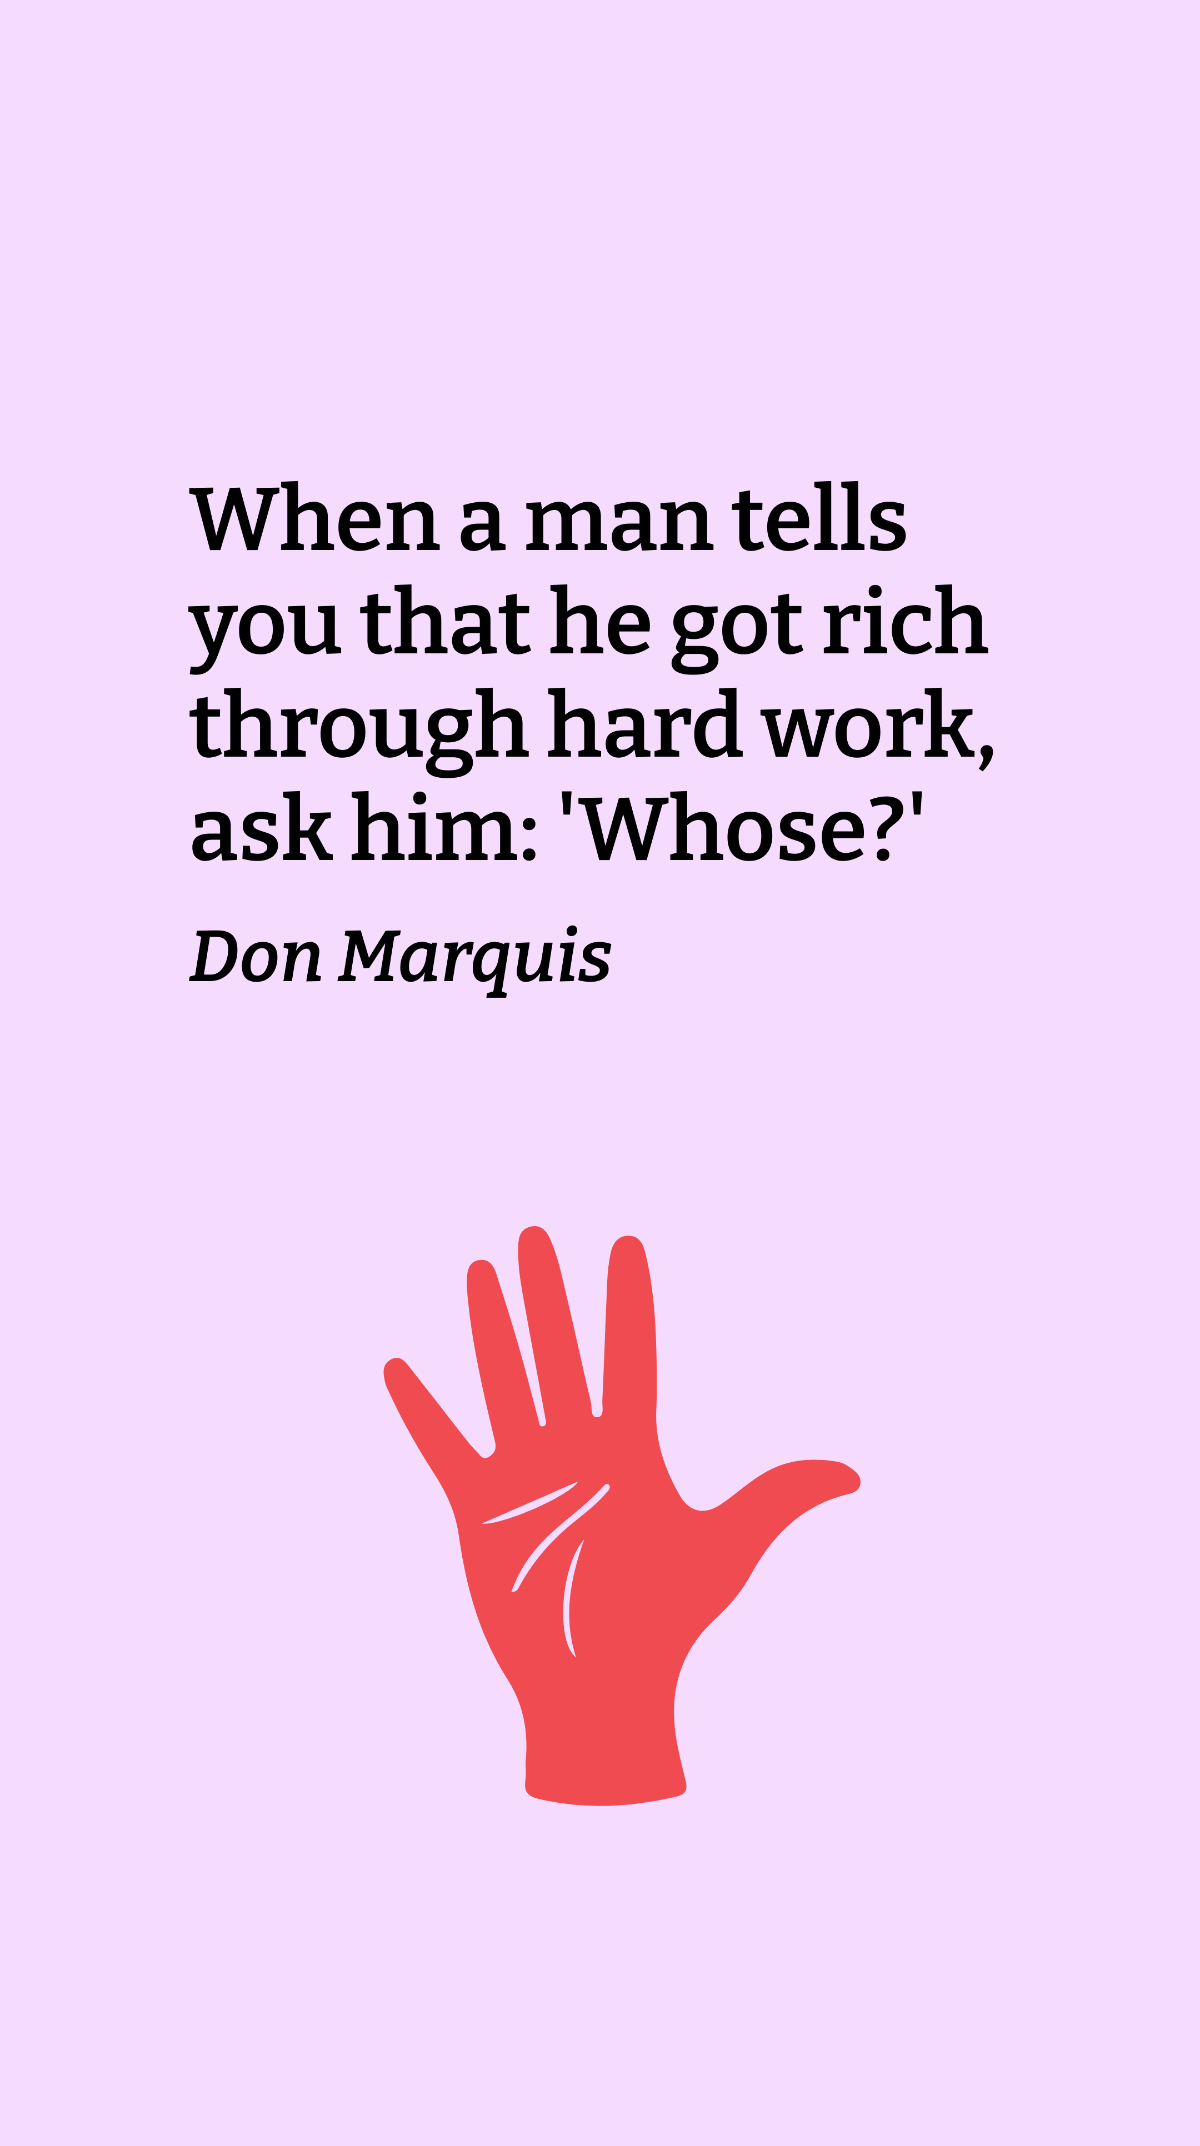 Don Marquis - When a man tells you that he got rich through hard work, ask him: 'Whose?'